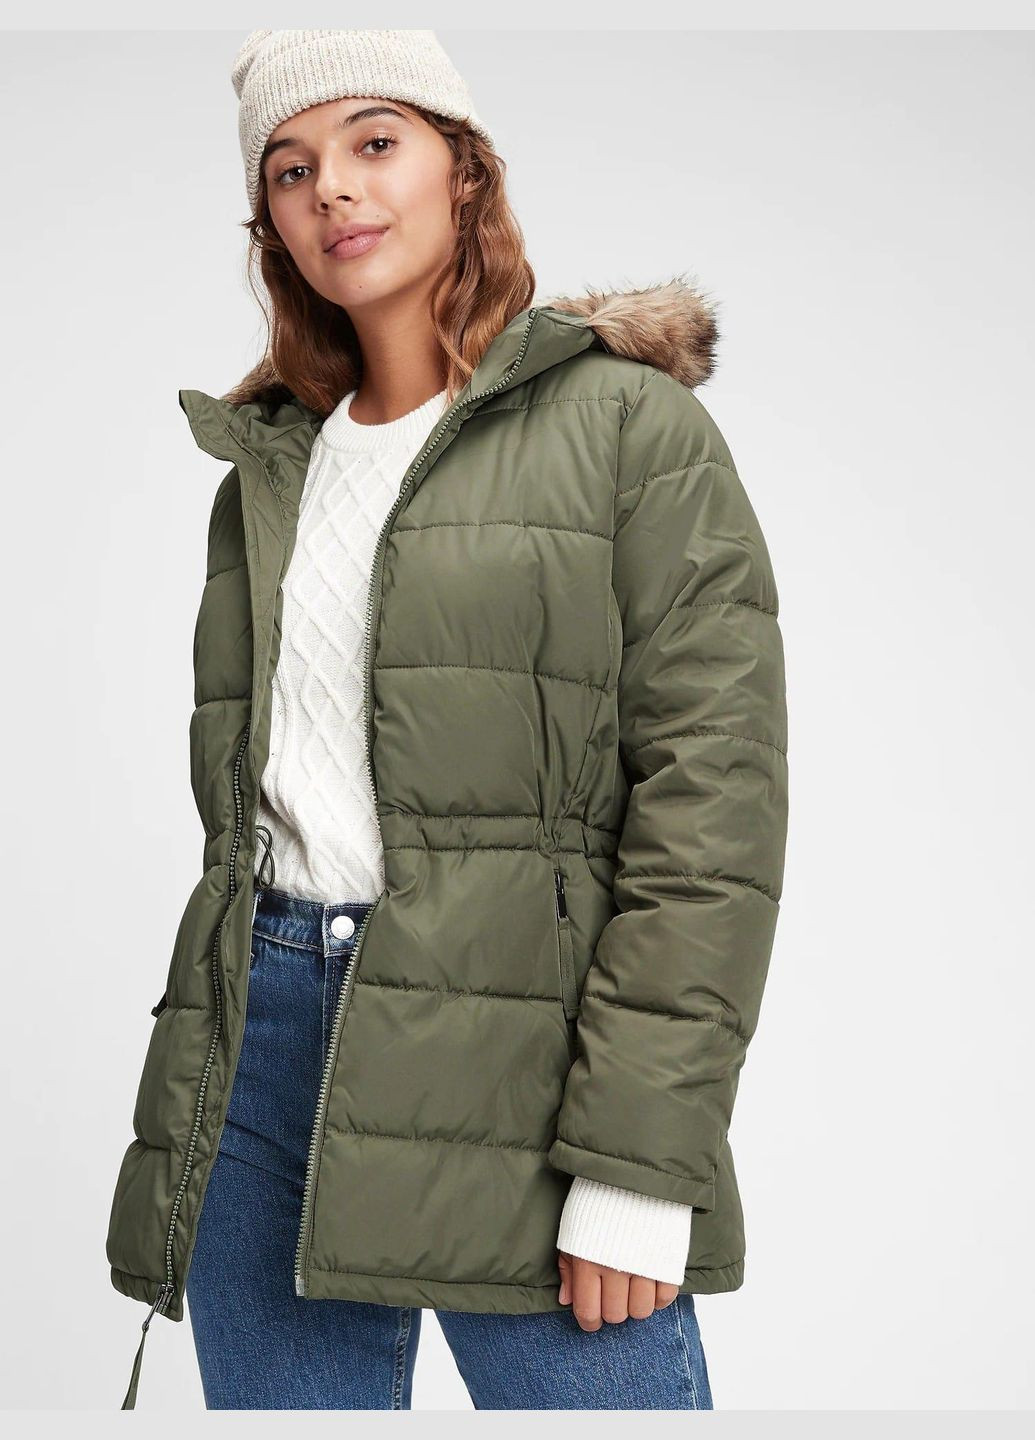 Оливковая демисезонная куртка демисезонная - женская куртка ga0843w Gap